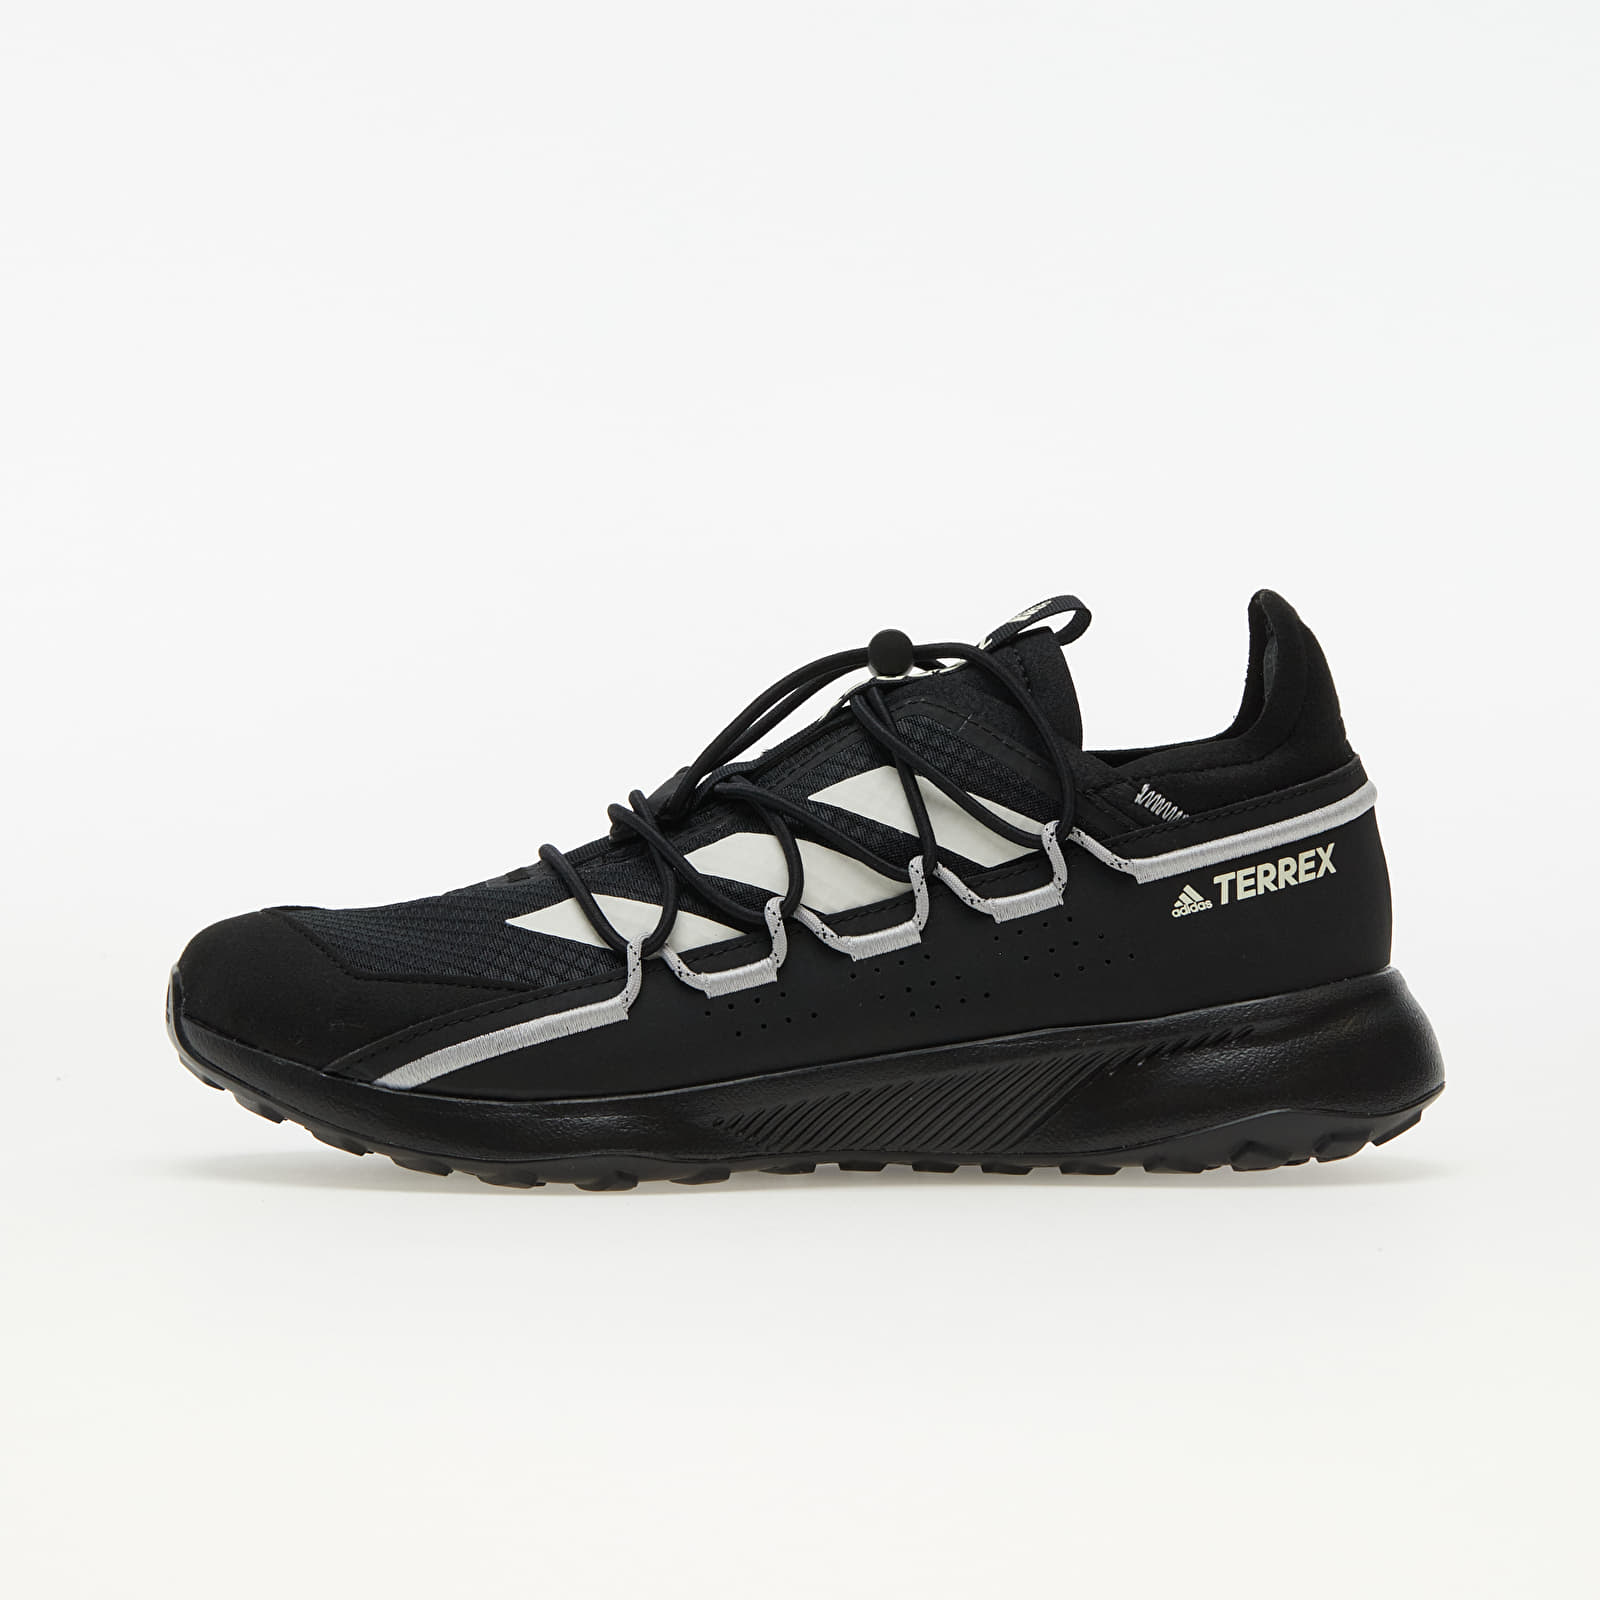 Men's shoes adidas Terrex Voyager 21 Core Black/ Core White/ Grey Two